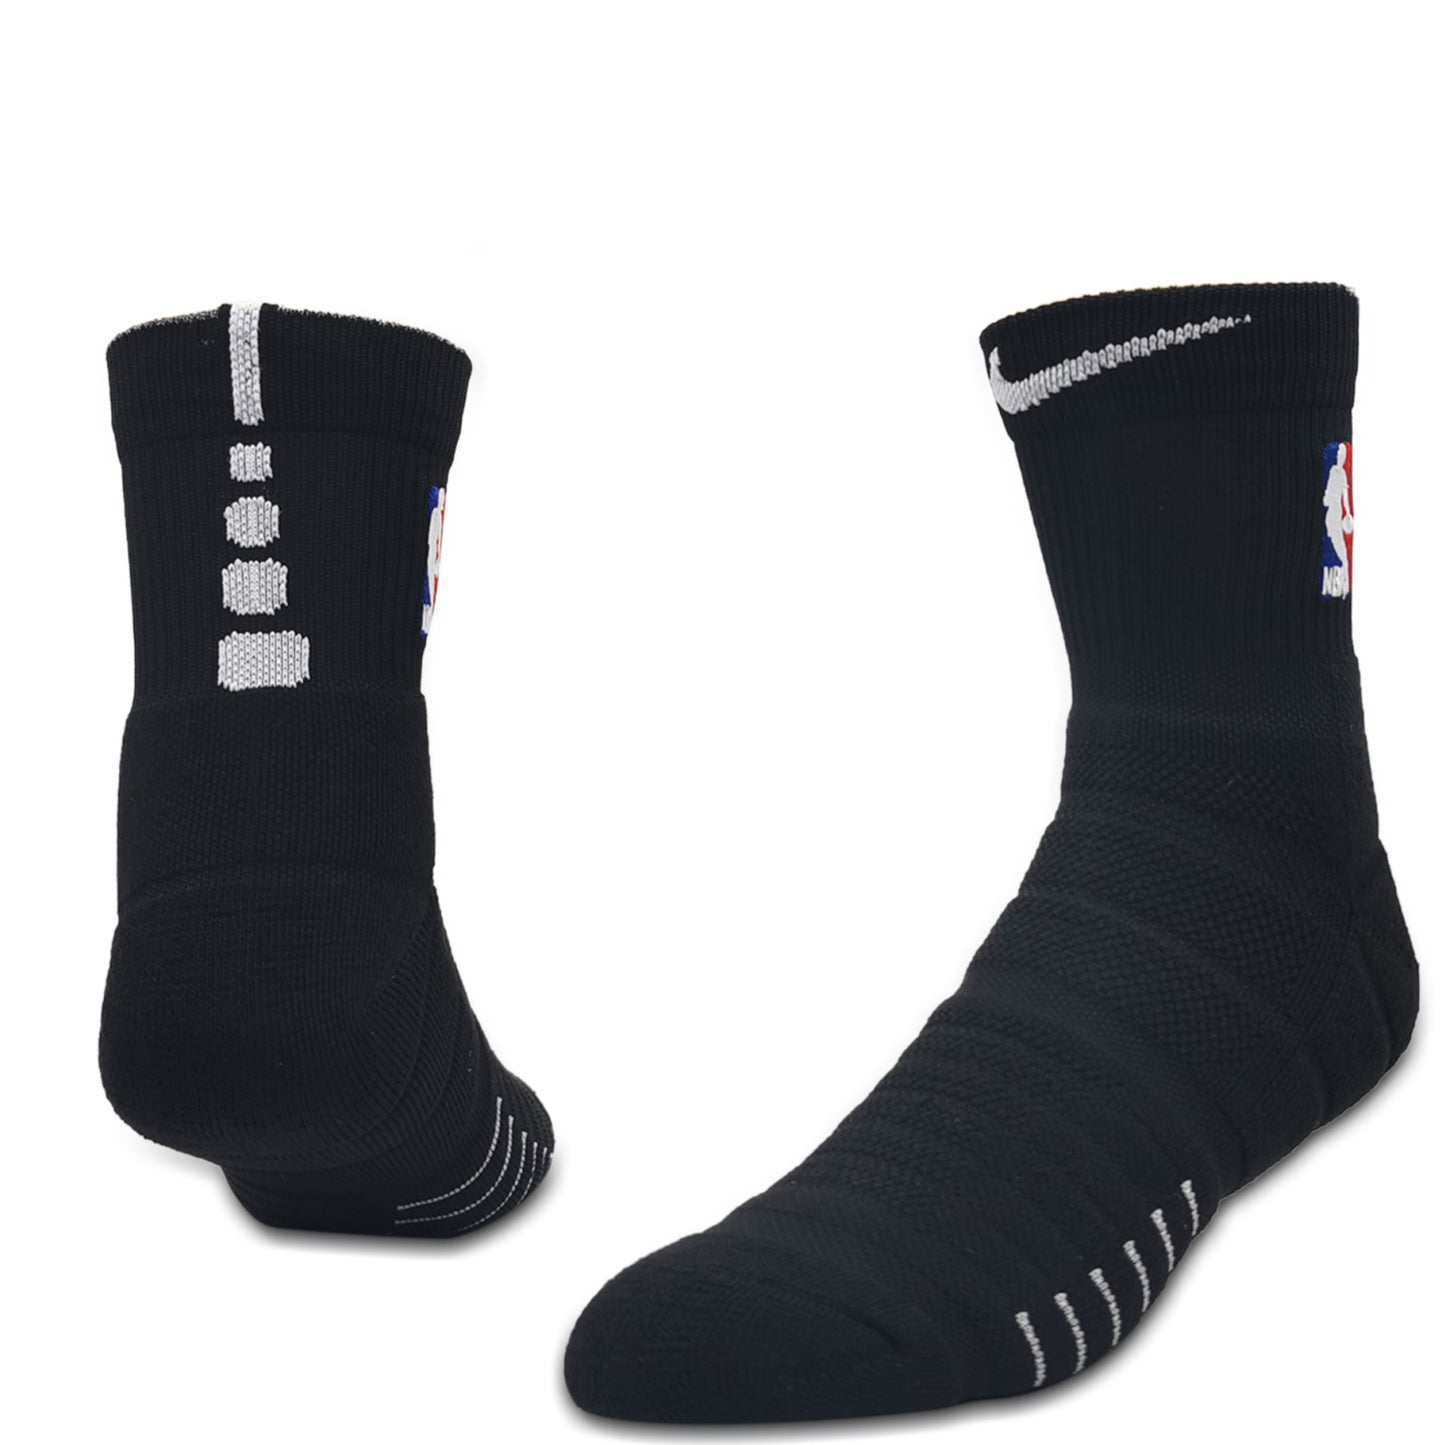 NIKE NBA Black Crew Basketball Socks